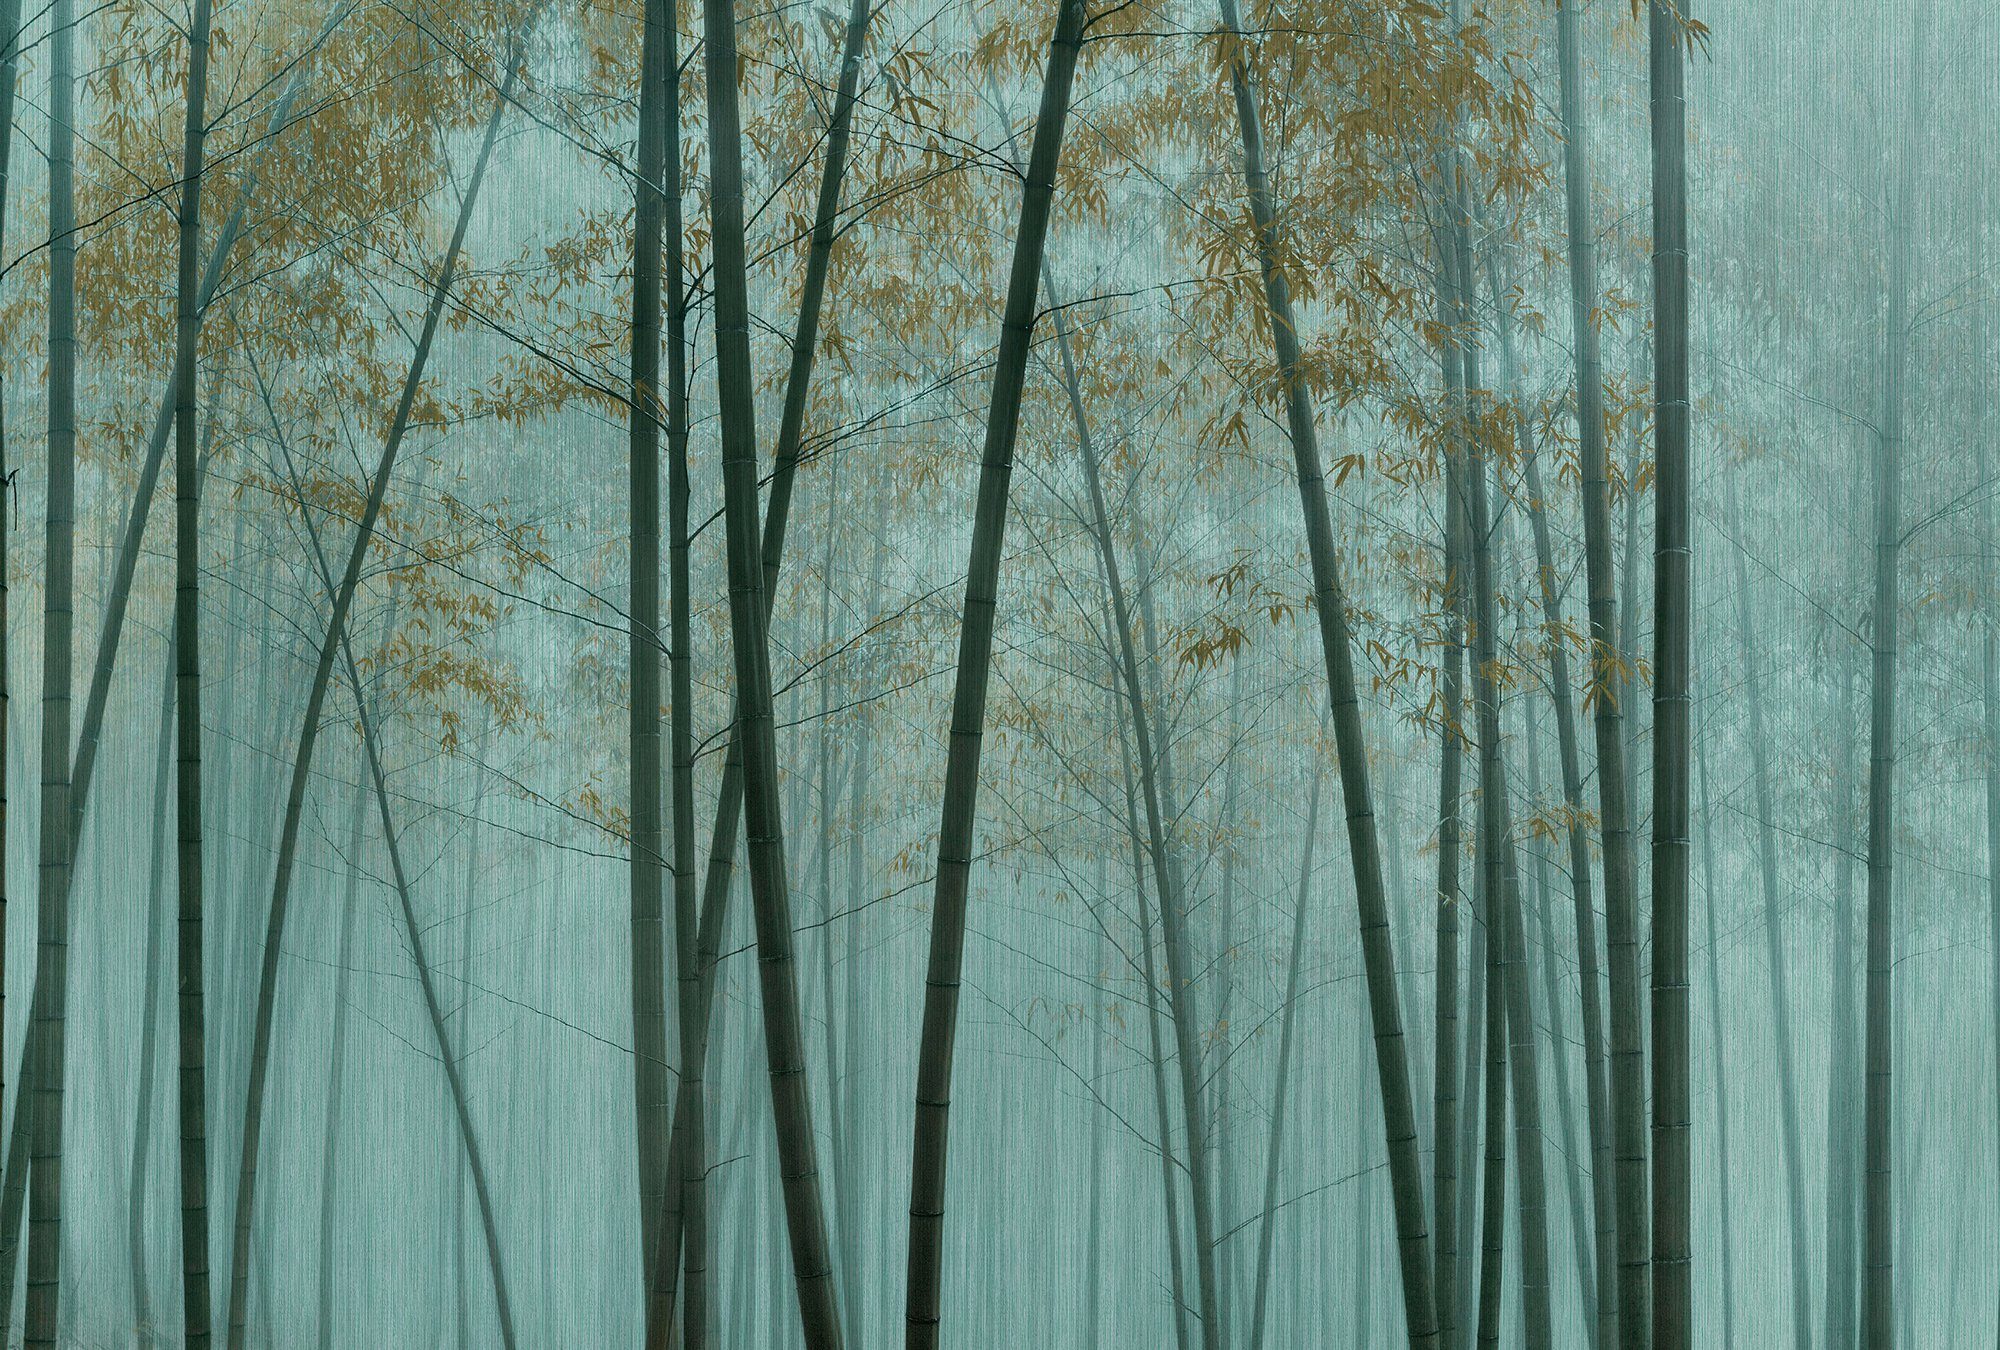 In Patel Fototapete Bamboo, Walls The Vlies, living glatt, by Wand walls grün